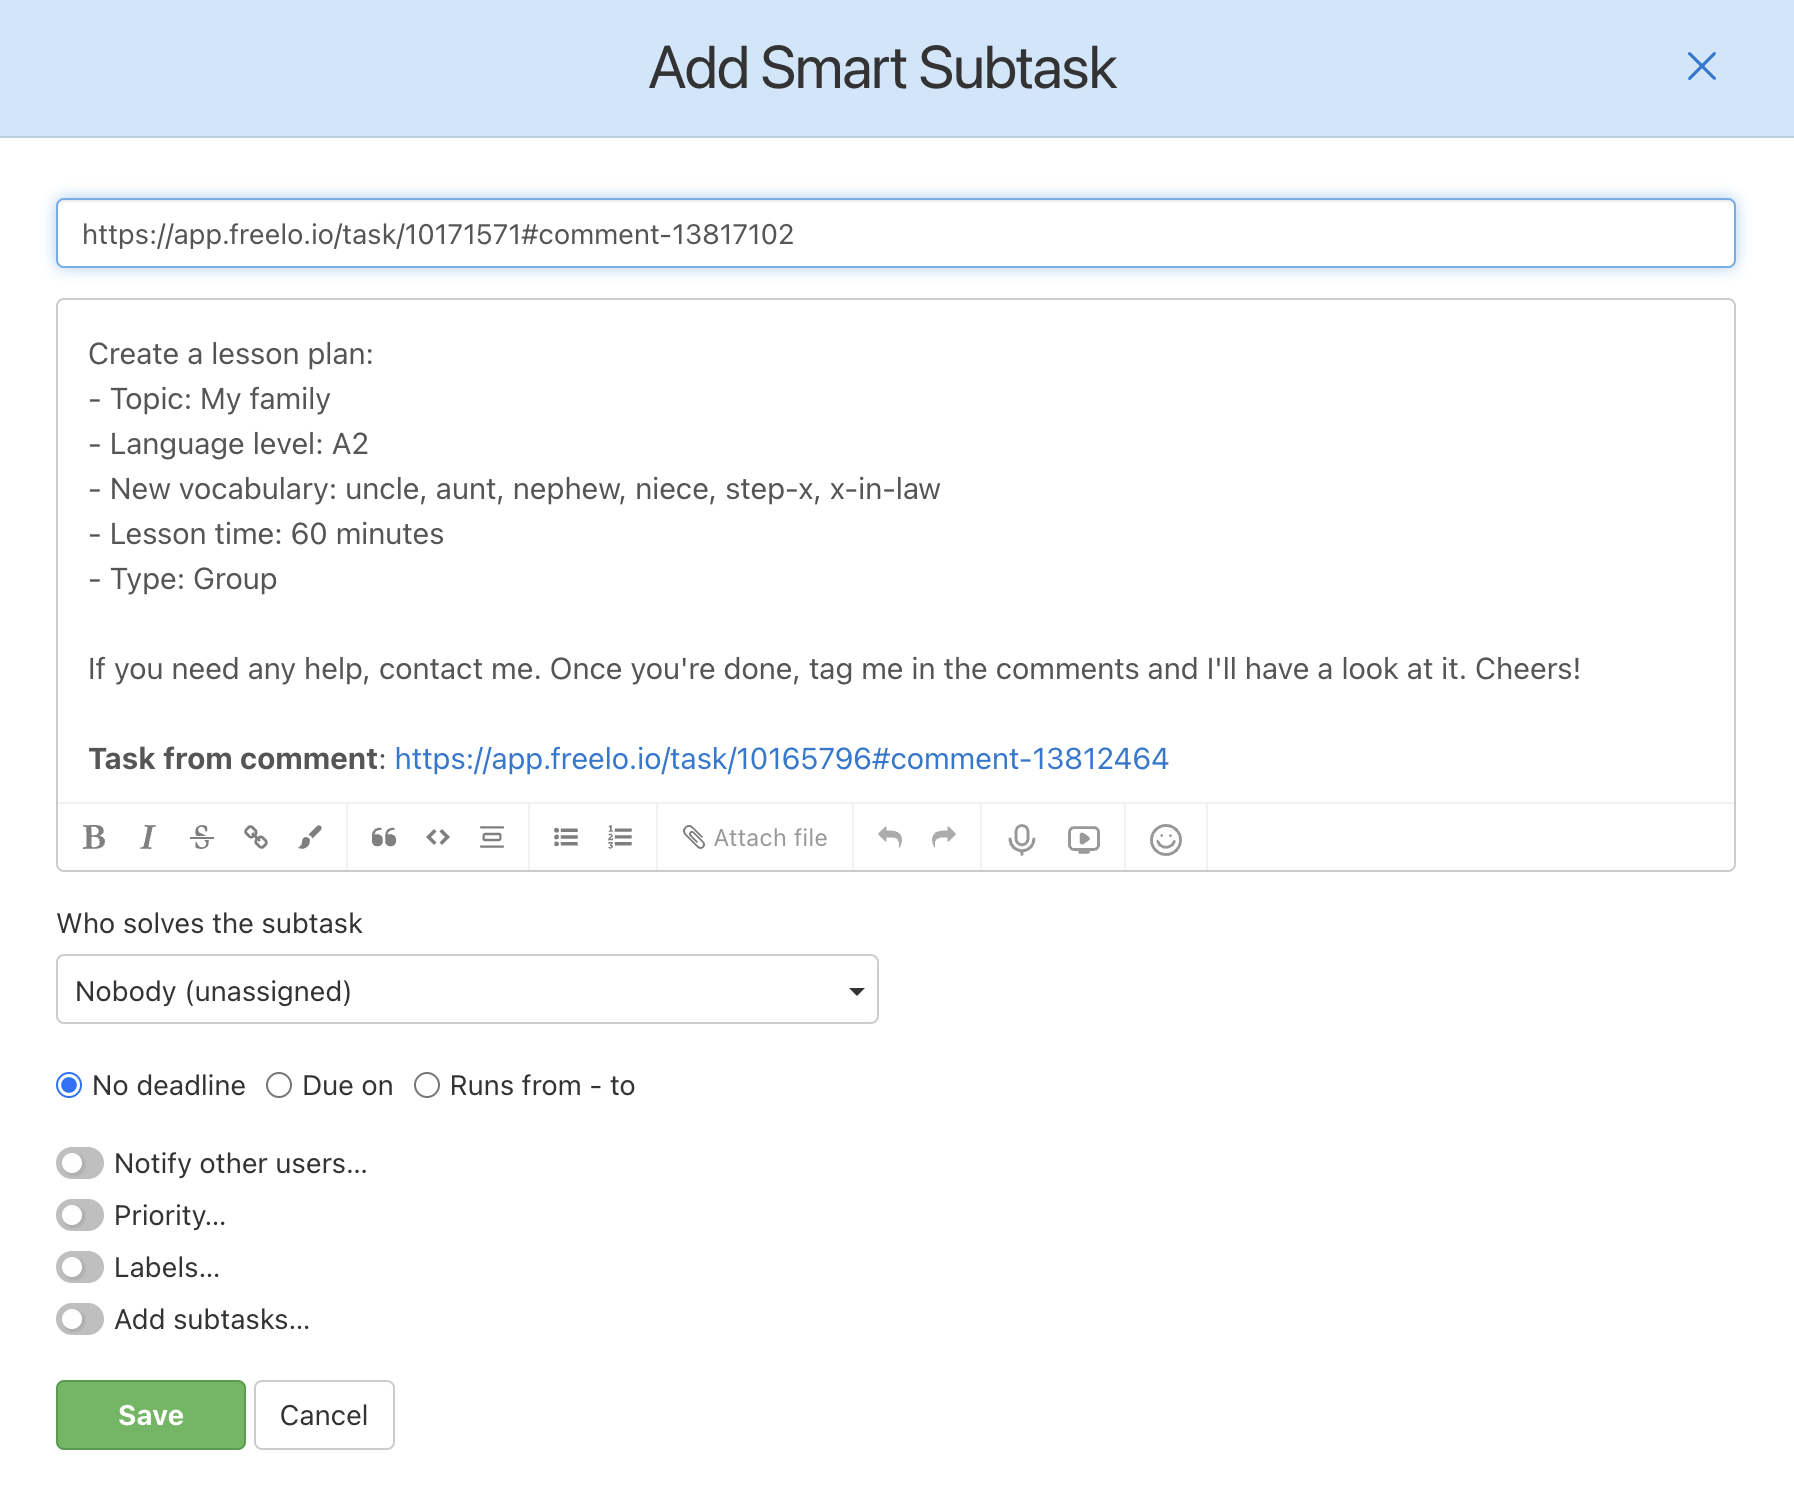 Creating a subtask from a task description.